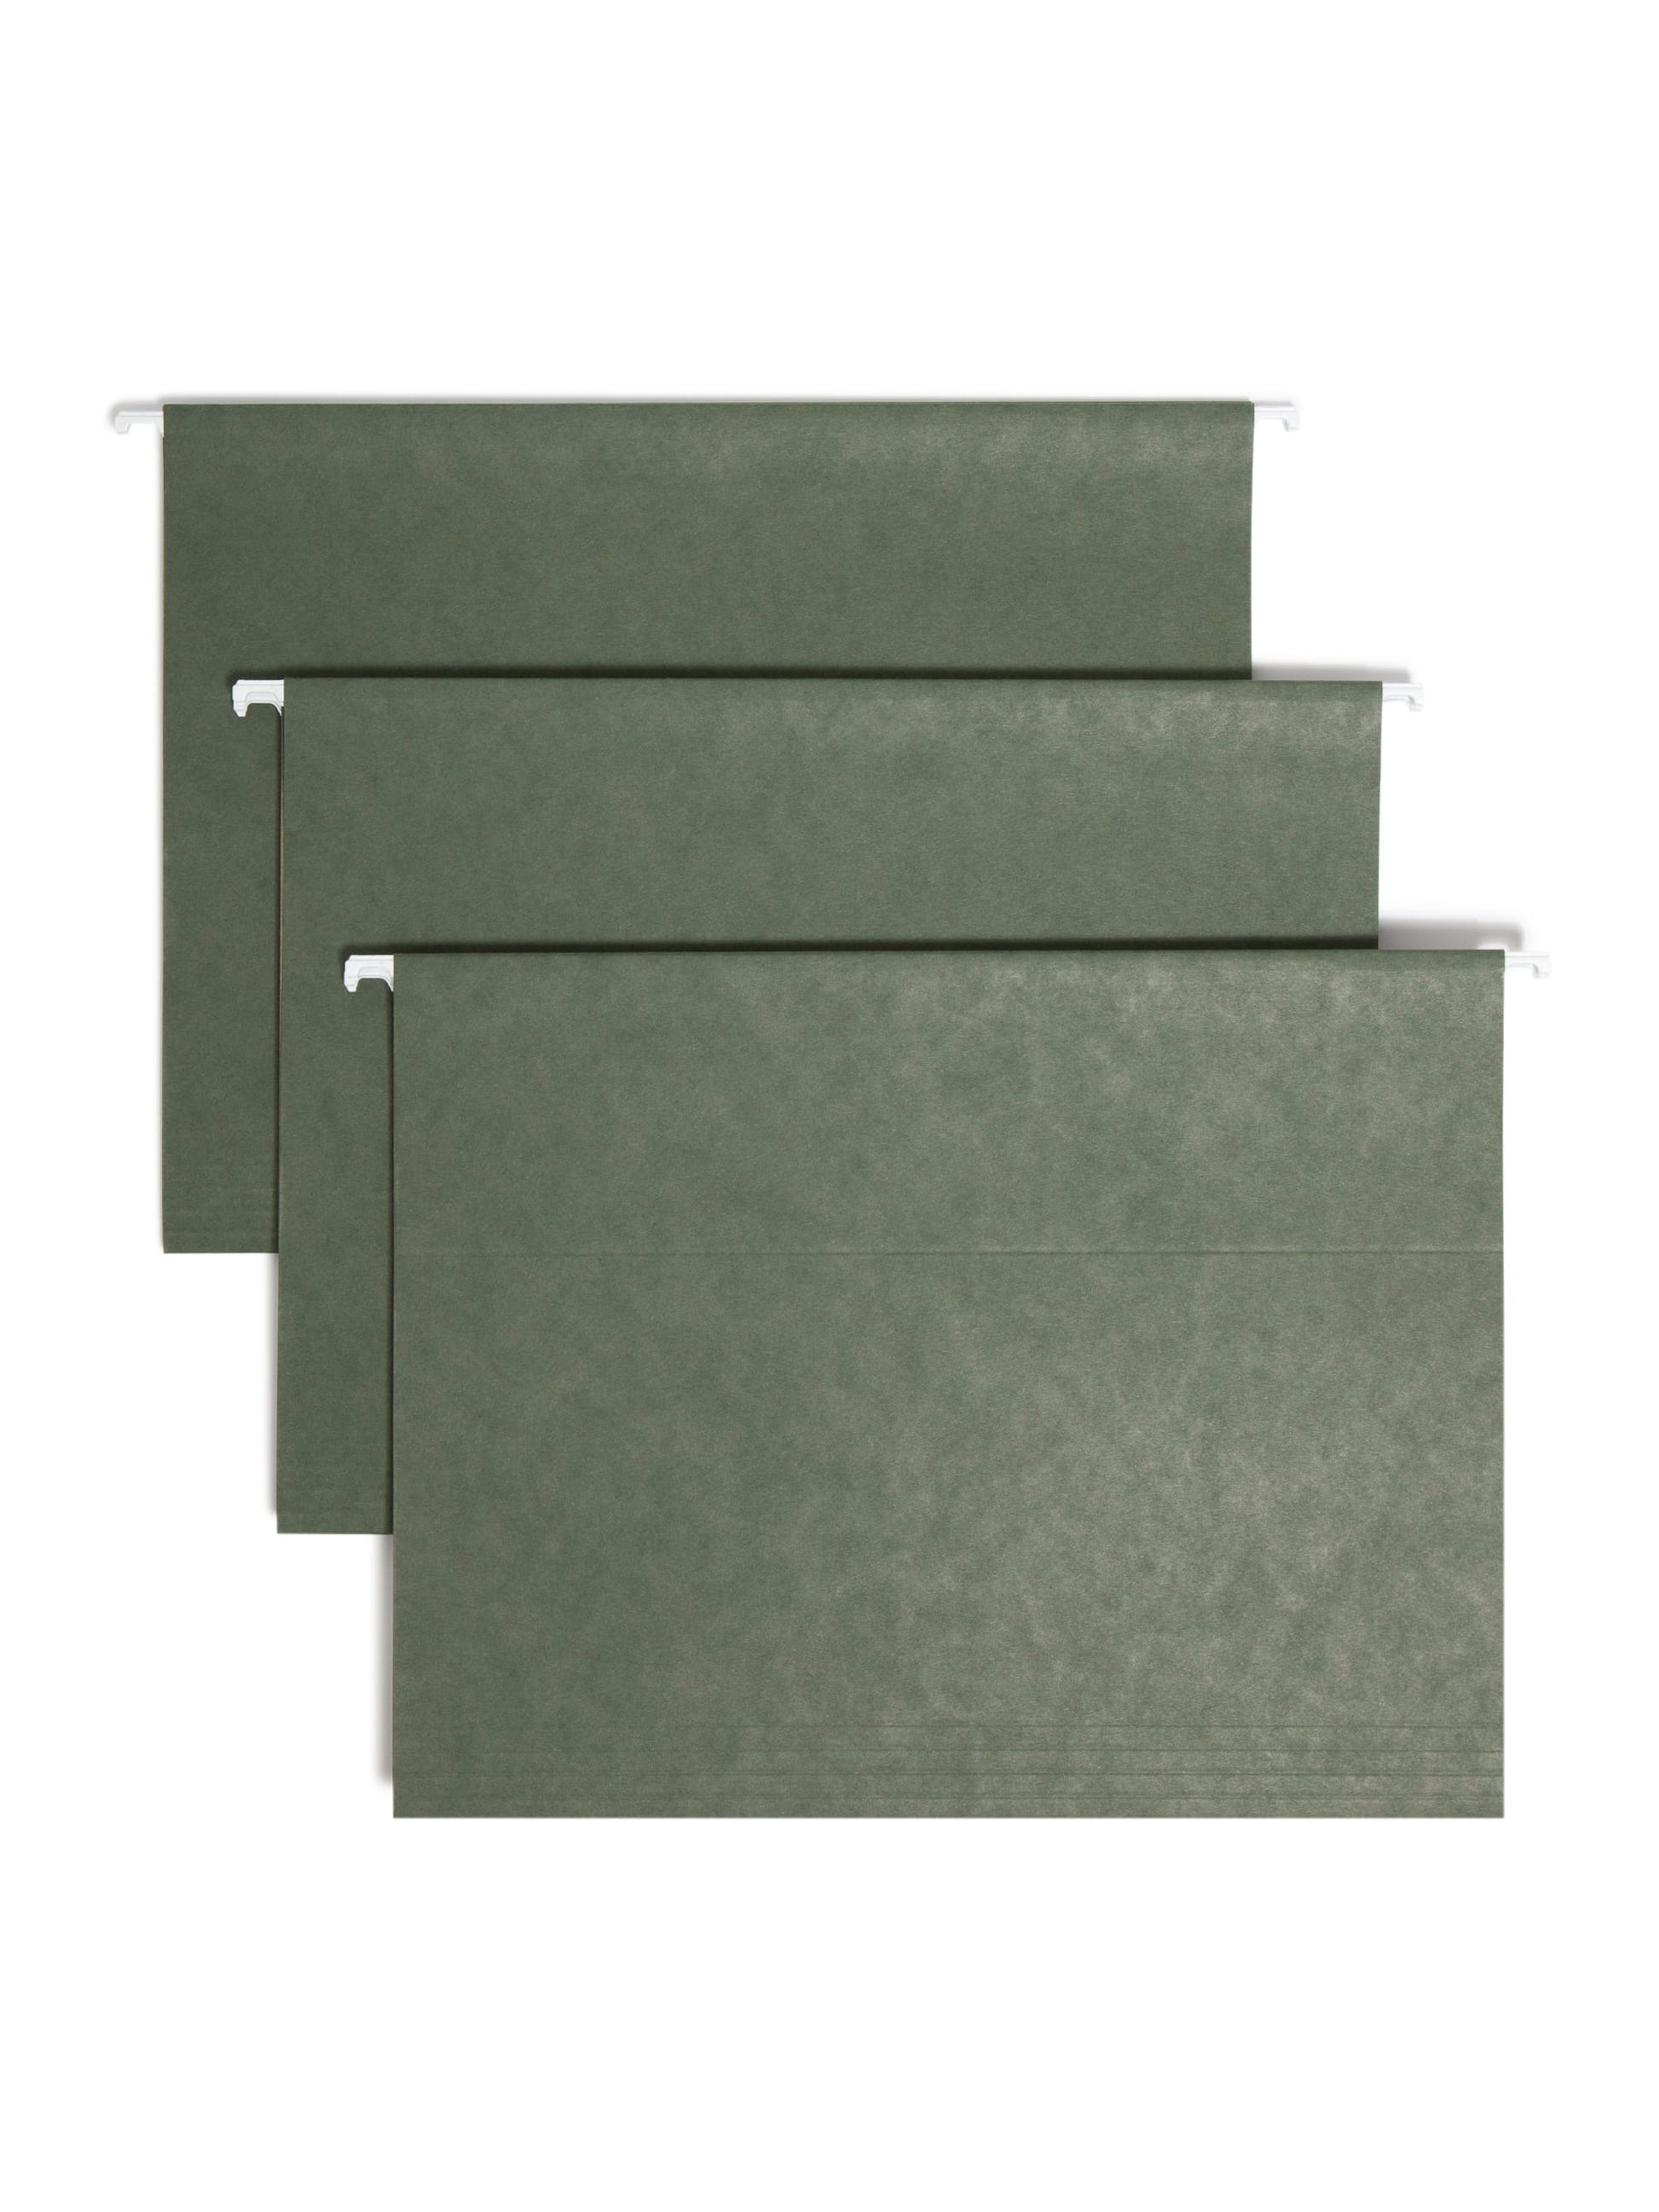 TUFF® Hanging File Folders with Easy Slide® Tabs, Standard Green Color, Letter Size, Set of 20, 086486640367